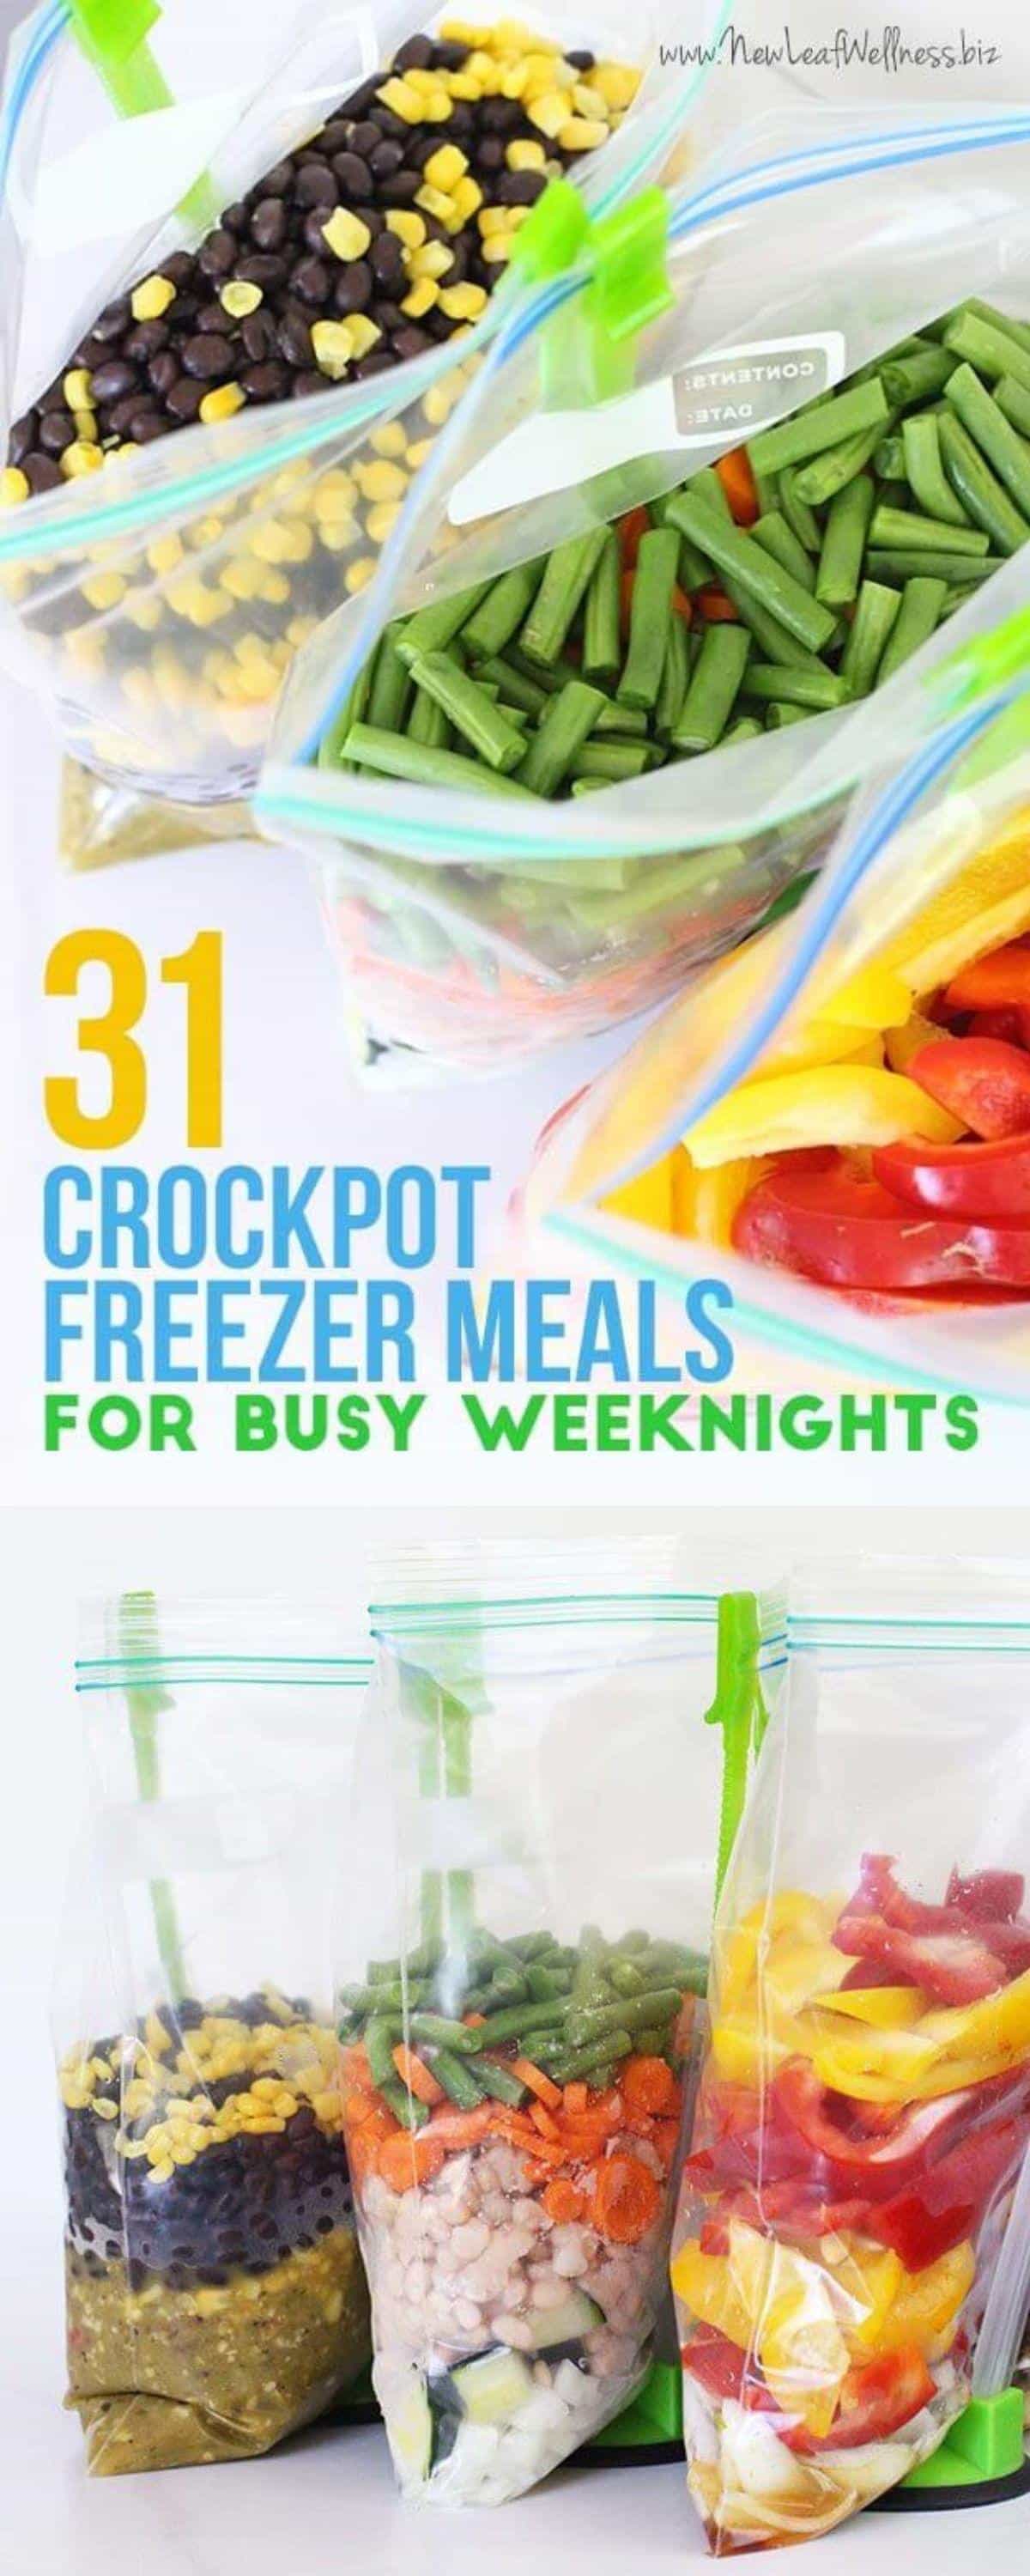 31 Crockpot Freezer Meals